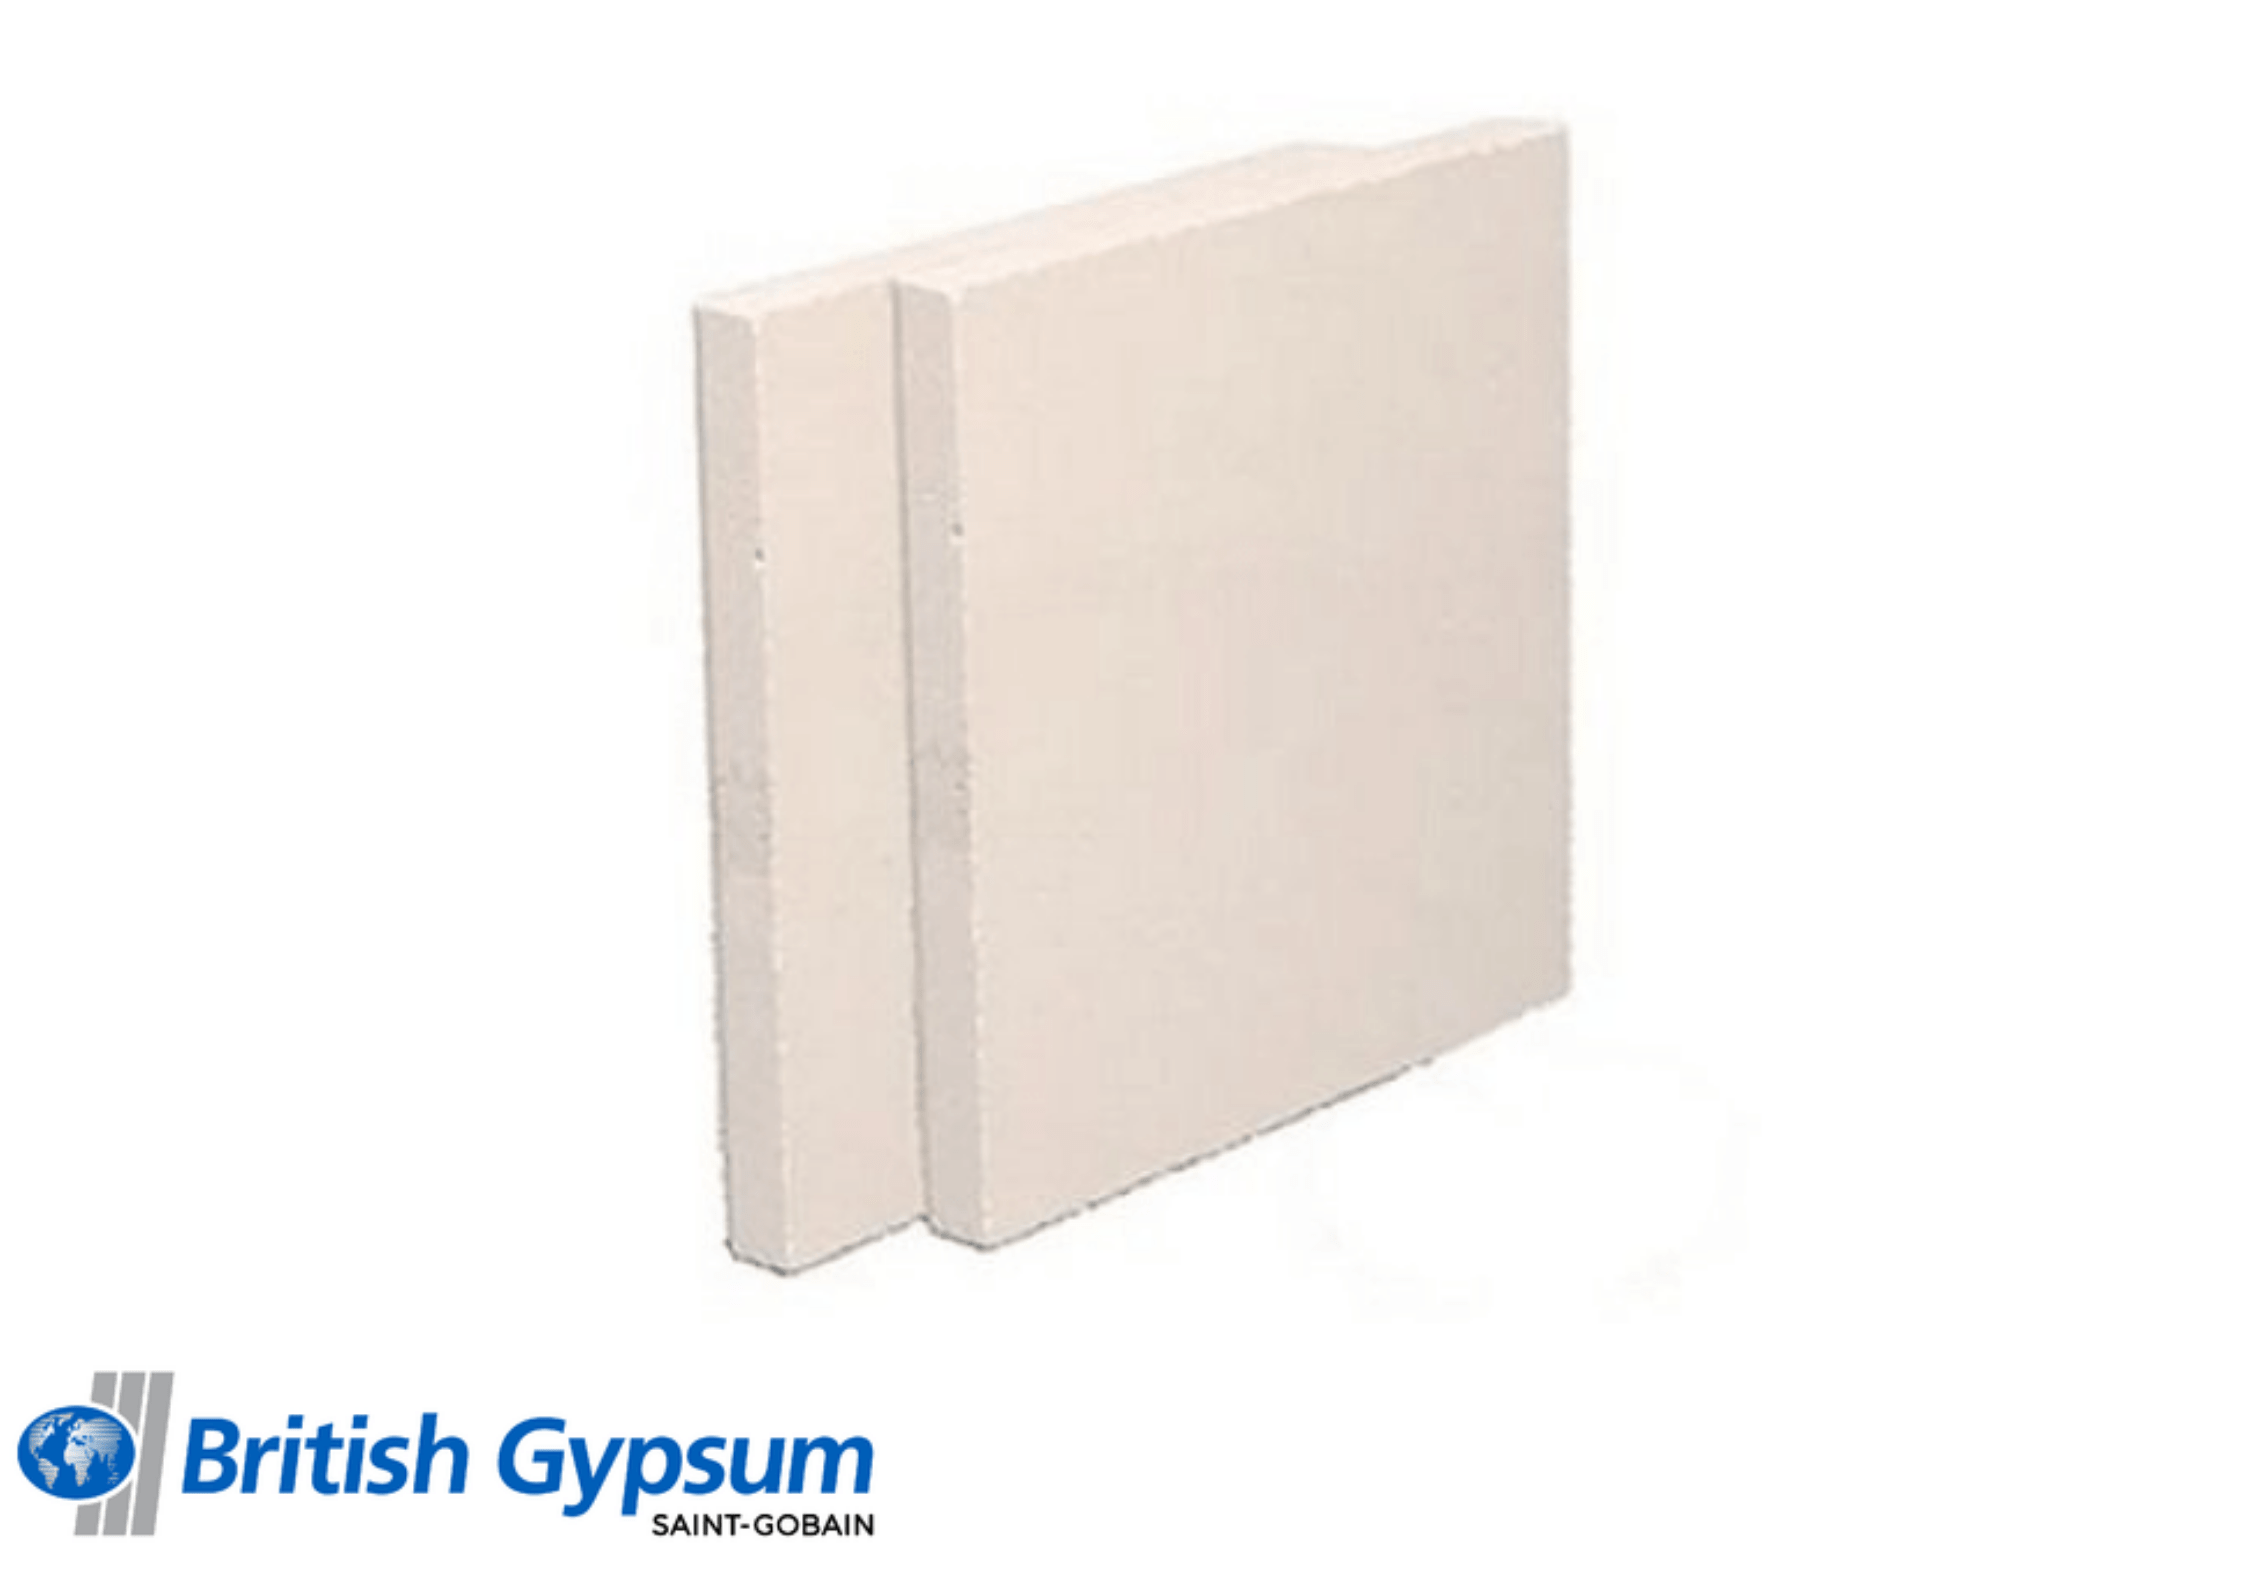 British Gypsum Drywall British Gypsum Glasroc F FireCase 2000 x 1200 x 25mm IUK01120 British Gypsum Glasroc F FireCase 2000 x 1200 x 25mm | Insulationuk.co.uk